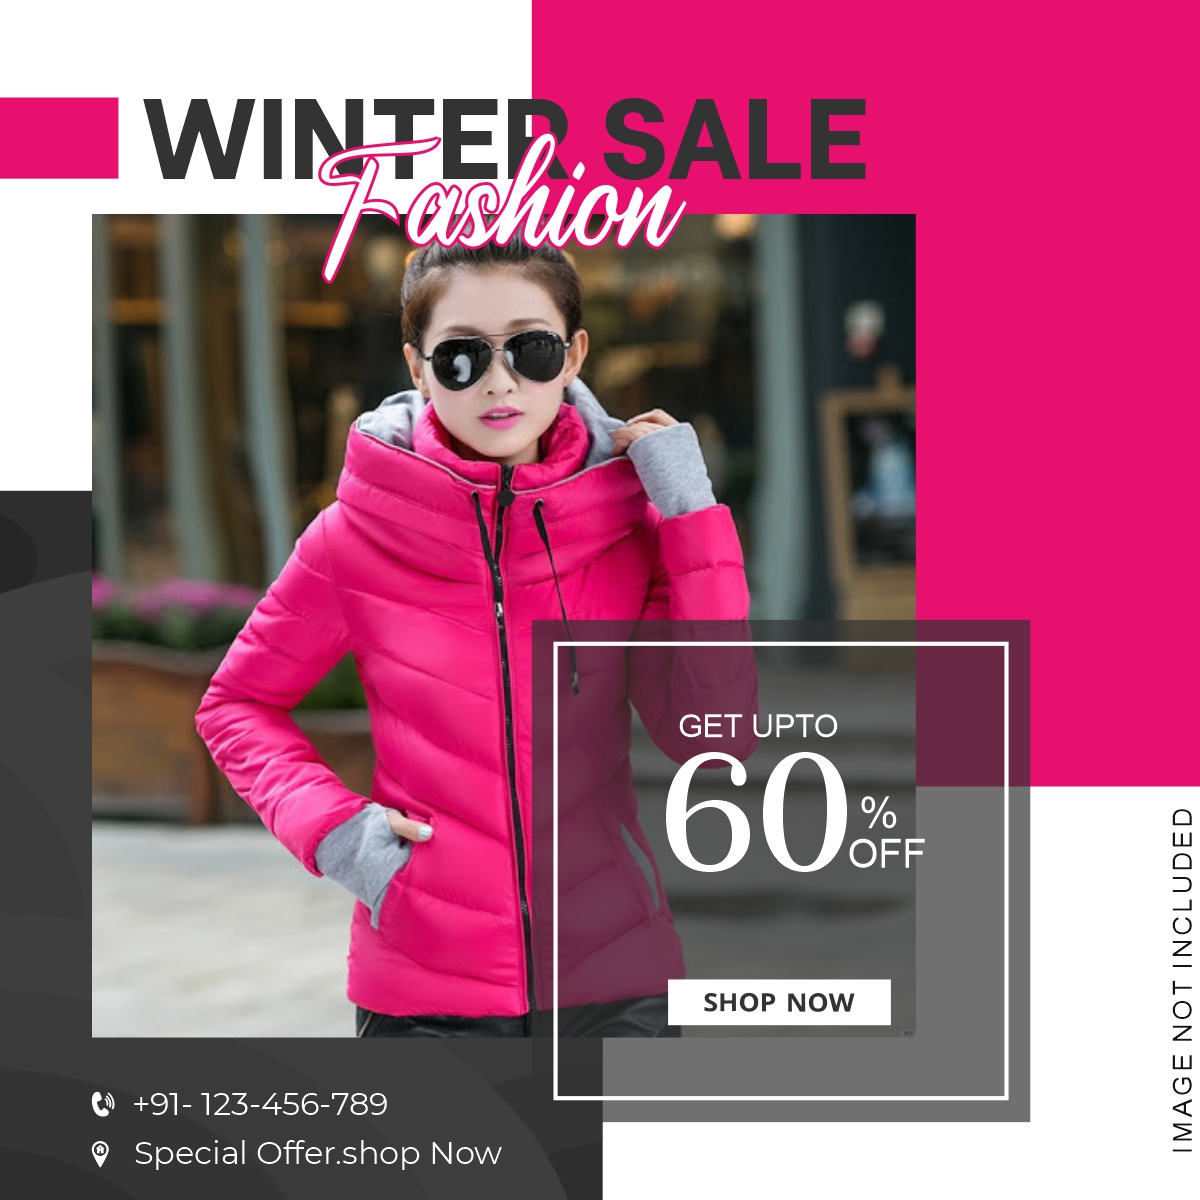 Winter Fashion Sale Instagram Post Template Design